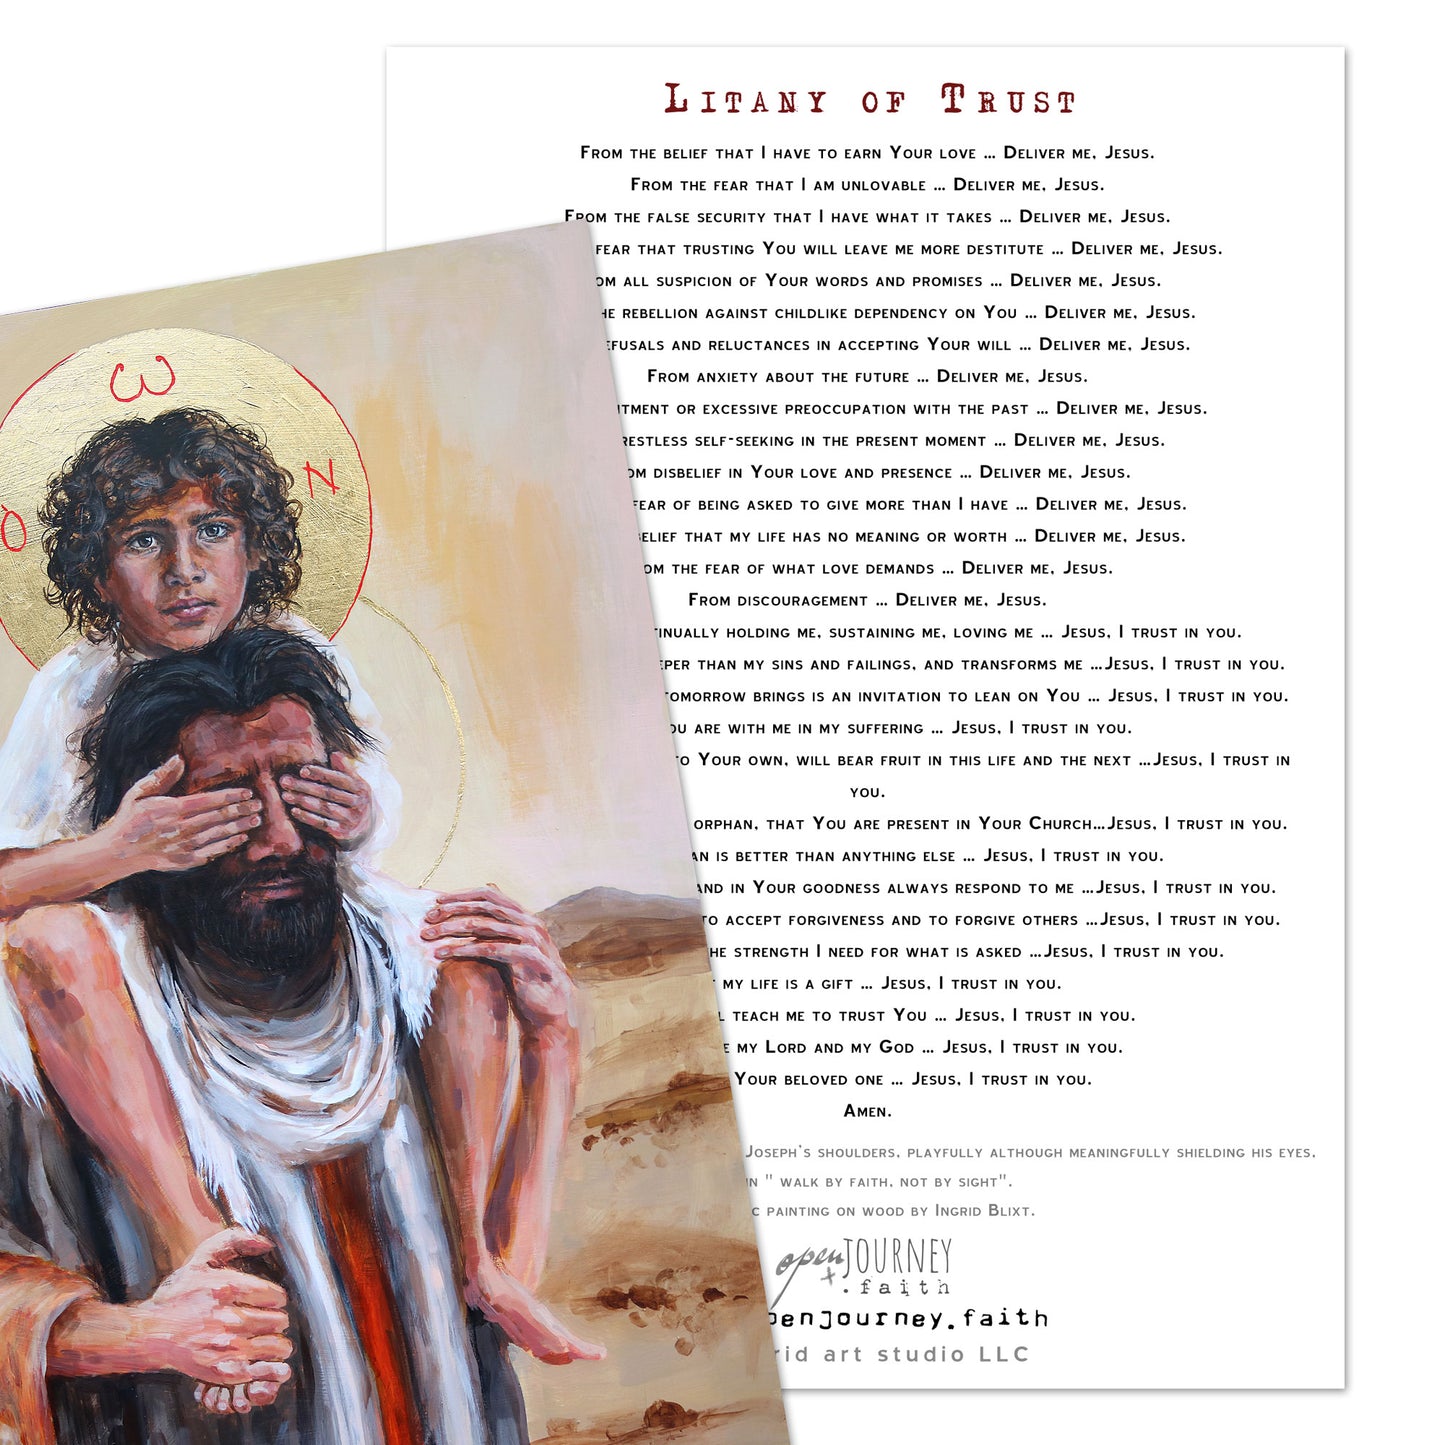 Trust - Jesus and Joseph - prayer card and prints